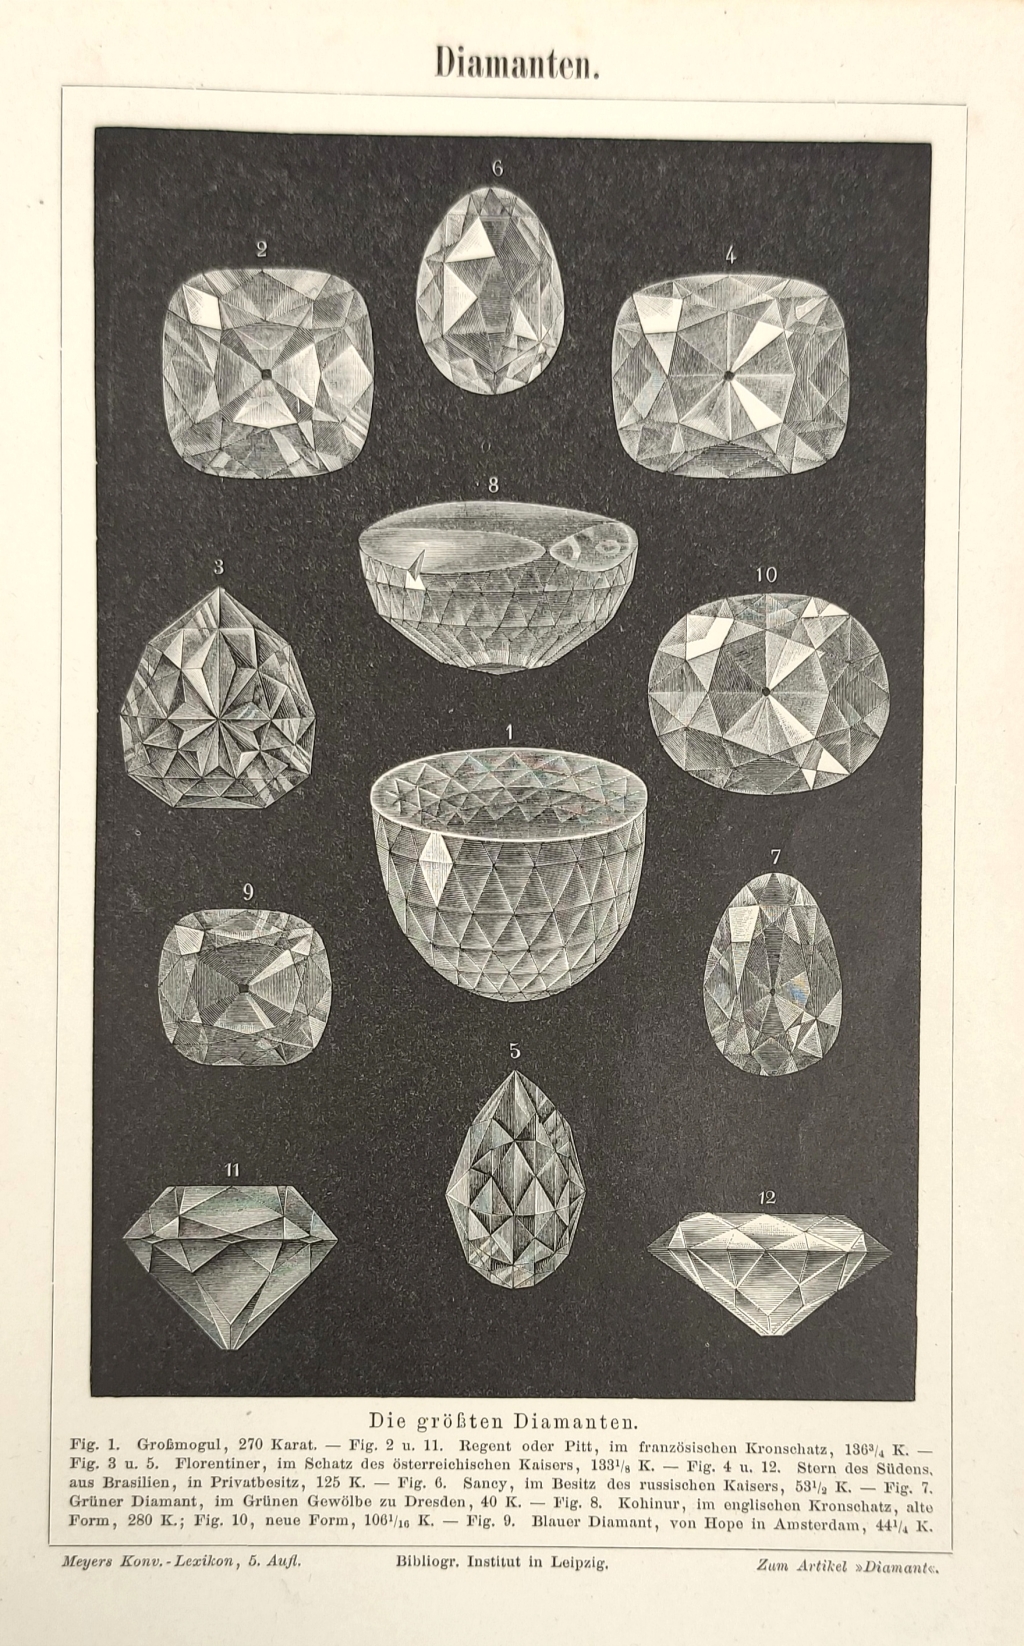 [rycina, 1894] Diamanten [diamenty]